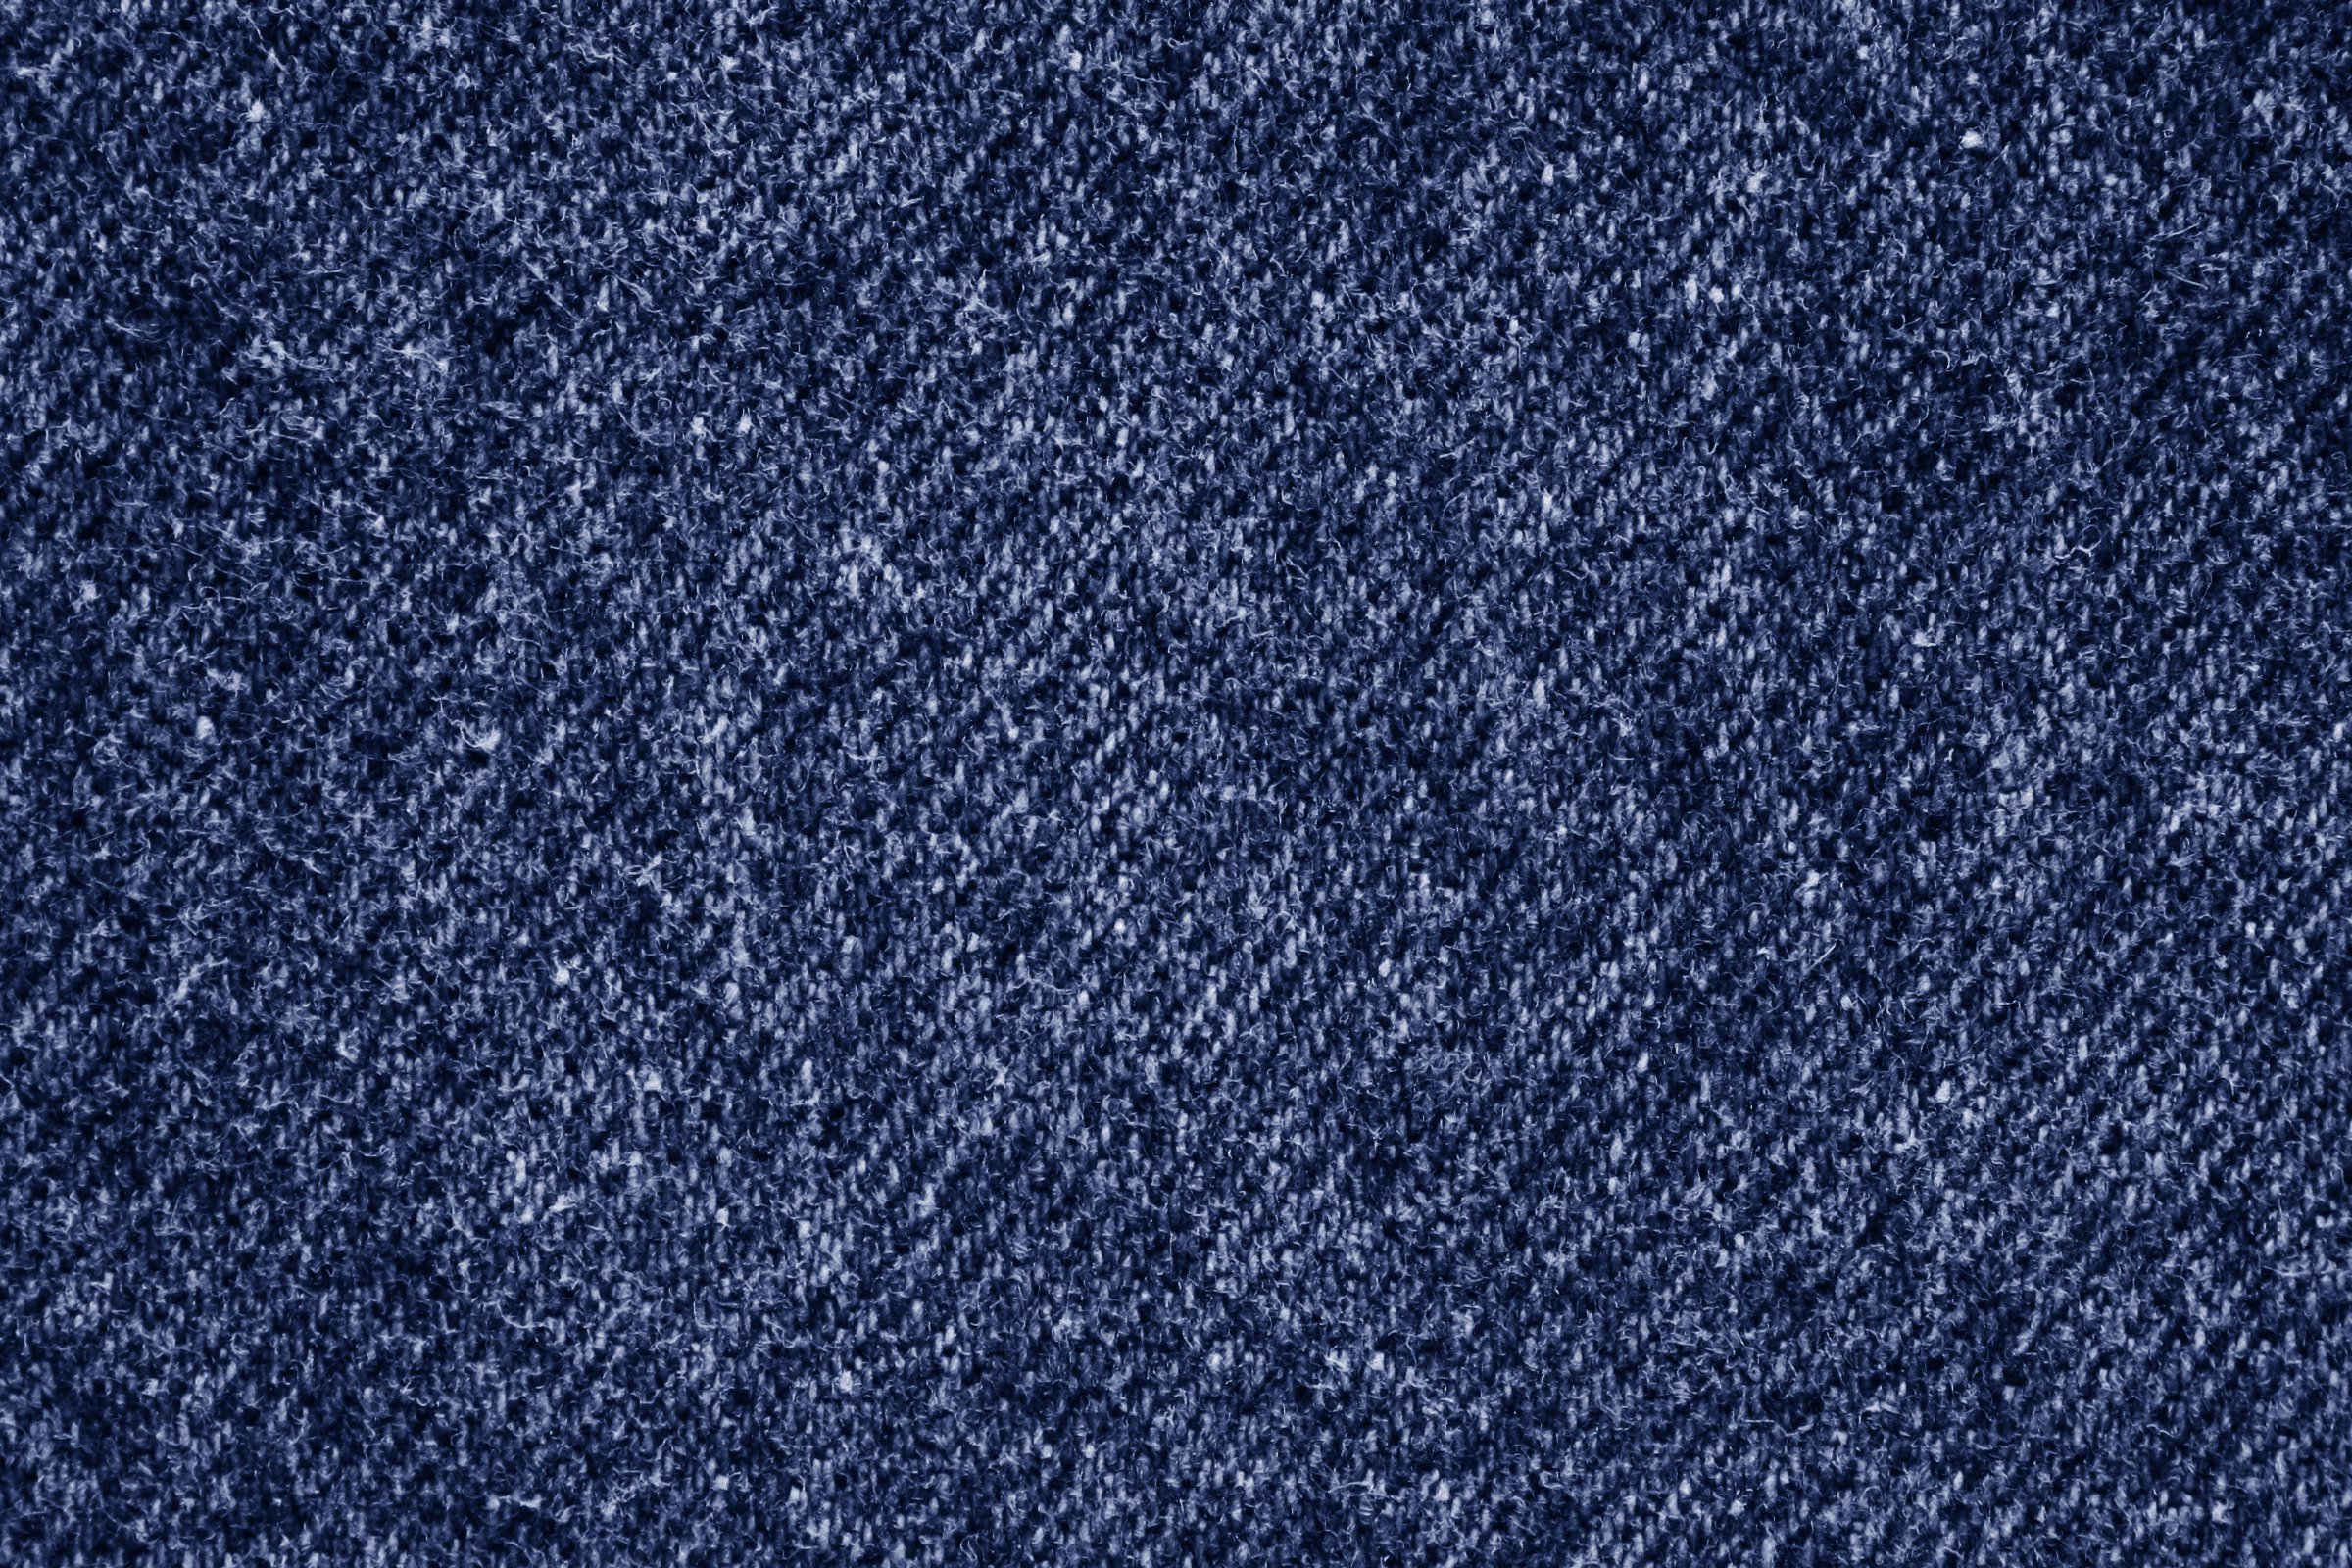 Dark Blue Denim Fabric Texture Picture, Free Photograph